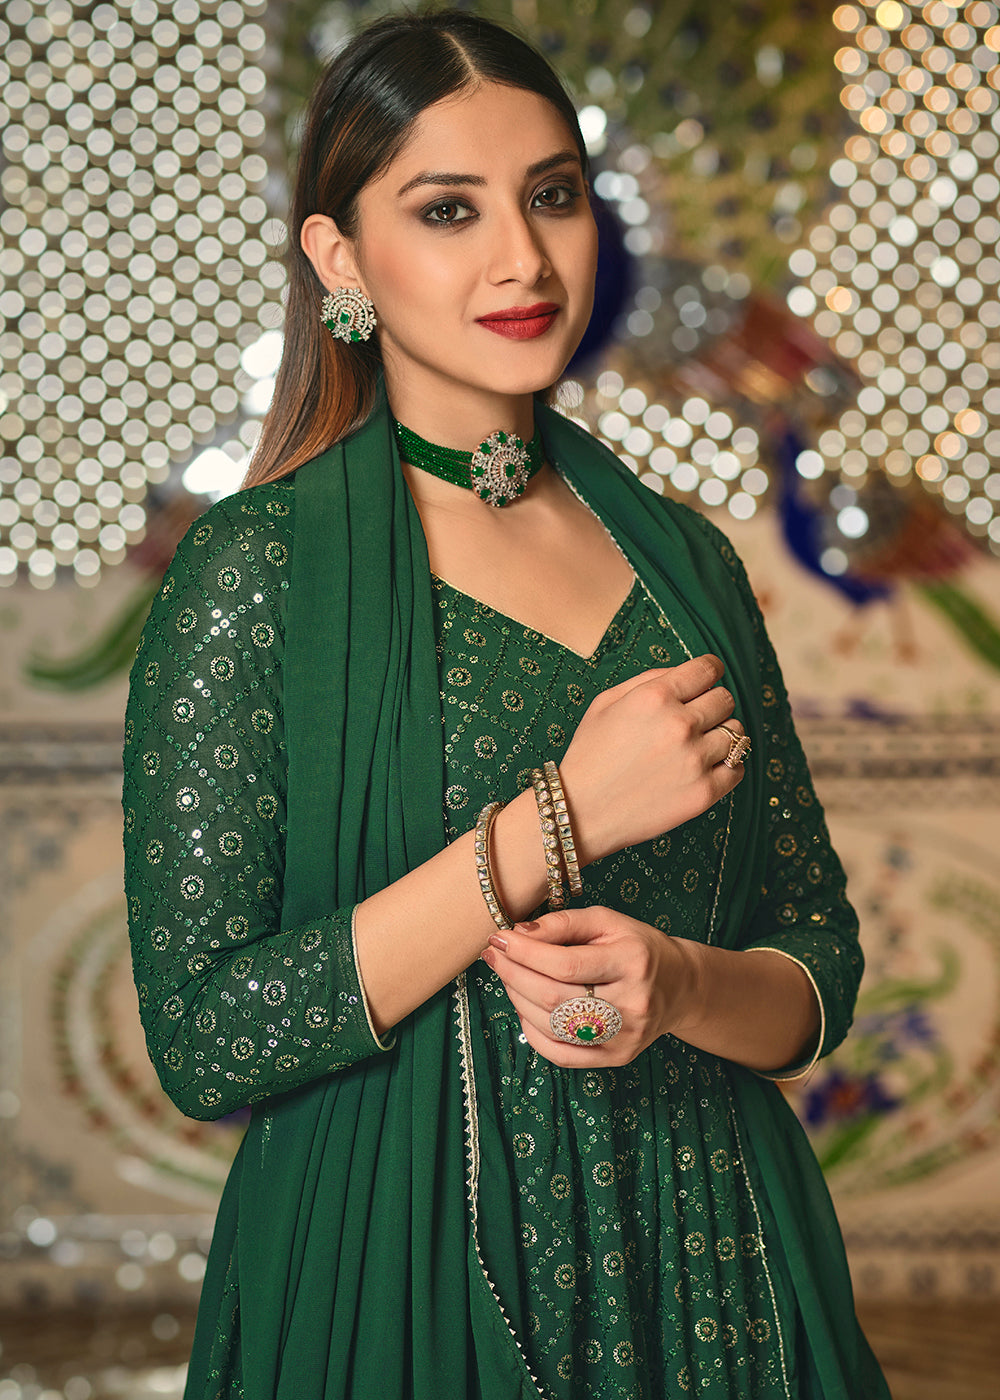 Buy Now Green Sequins Front Slit Wedding Anarkali Lehenga Online in USA, UK, Canada & Worldwide at Empress Clothing. 